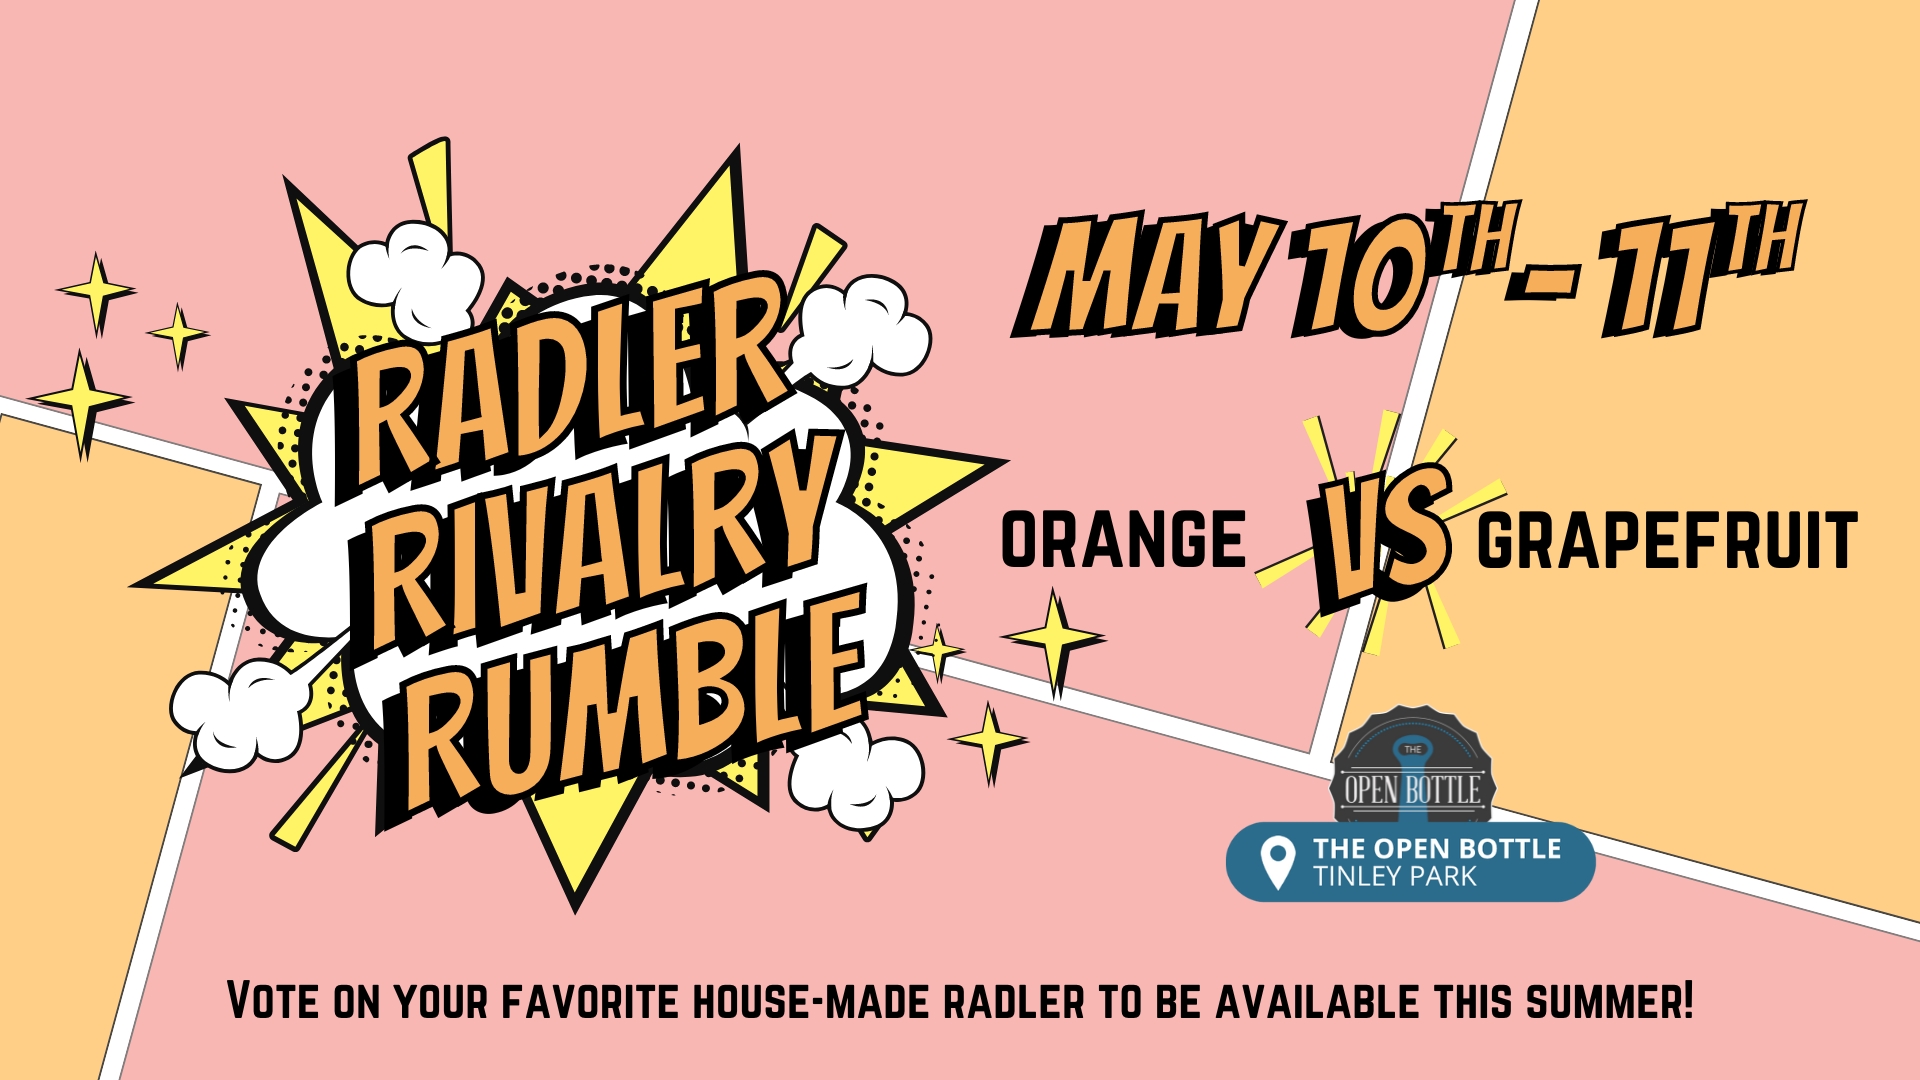 Event: Radler Rivalry Rumble